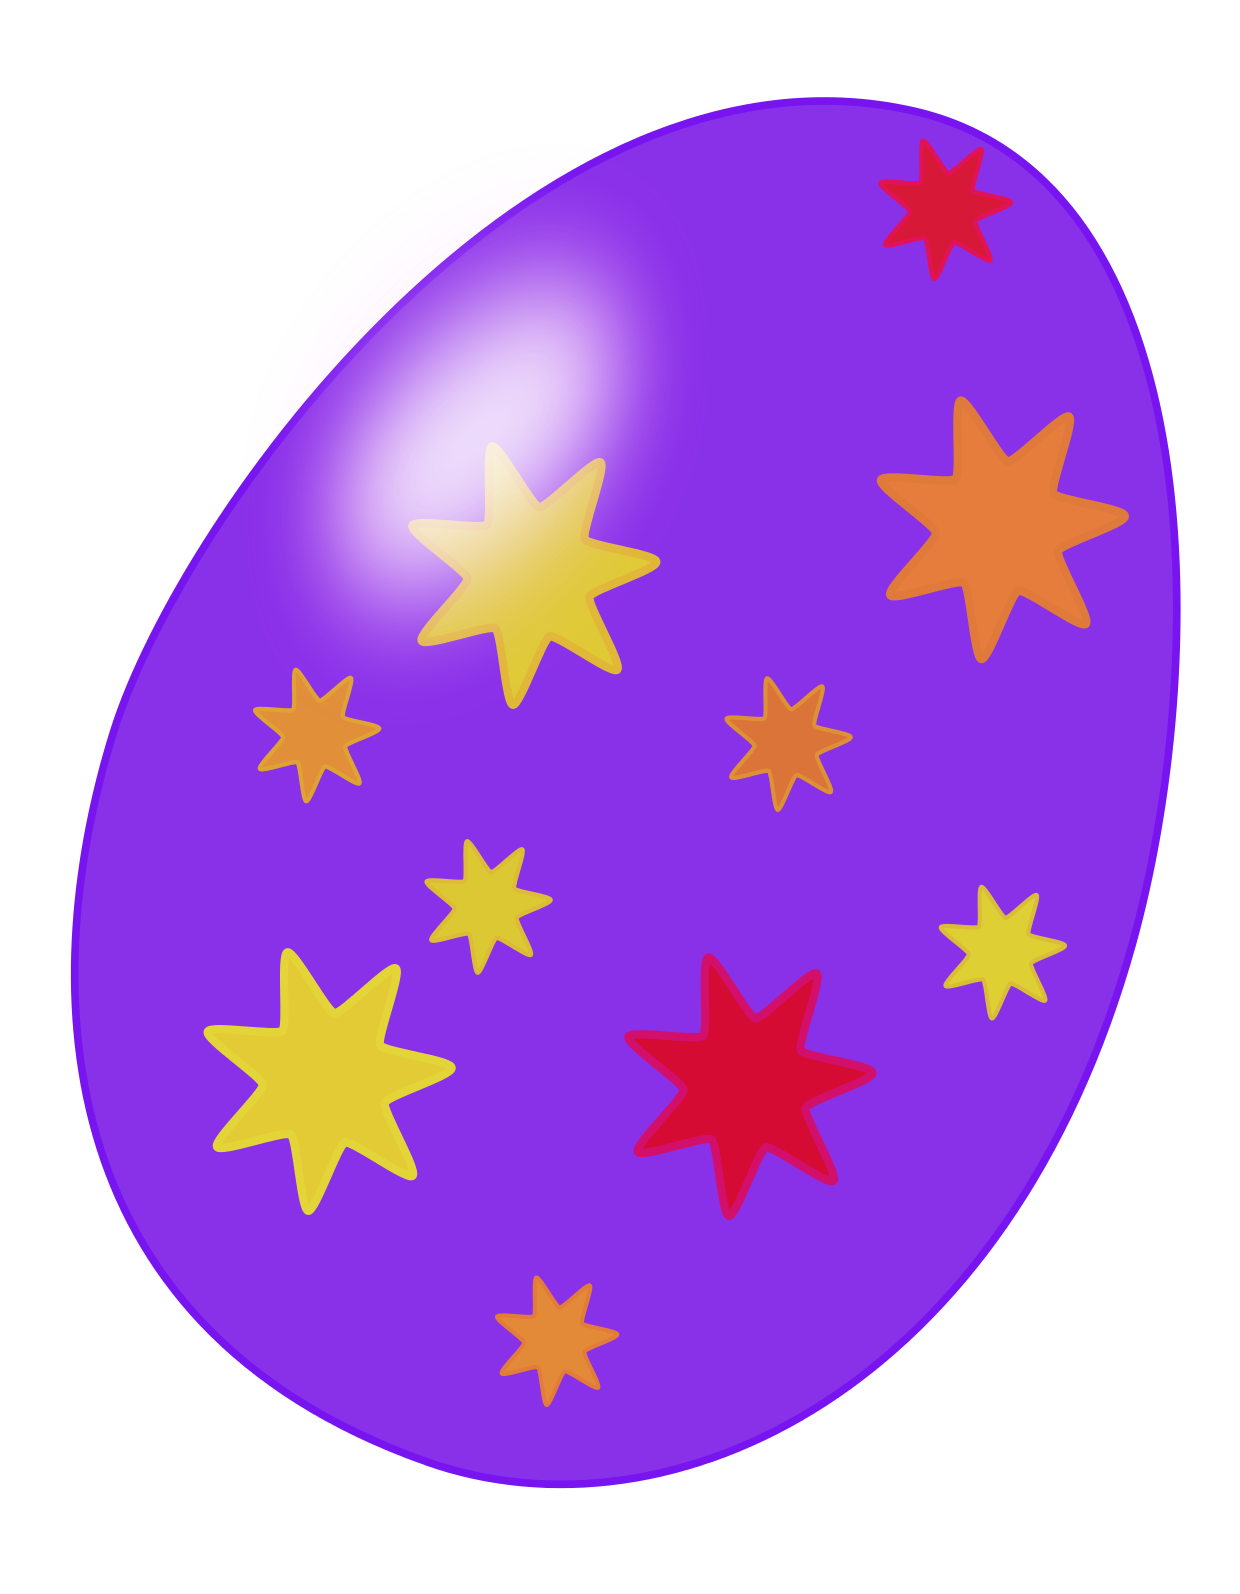 Free Purple Easter Egg Clip A - Easter Egg Images Clip Art